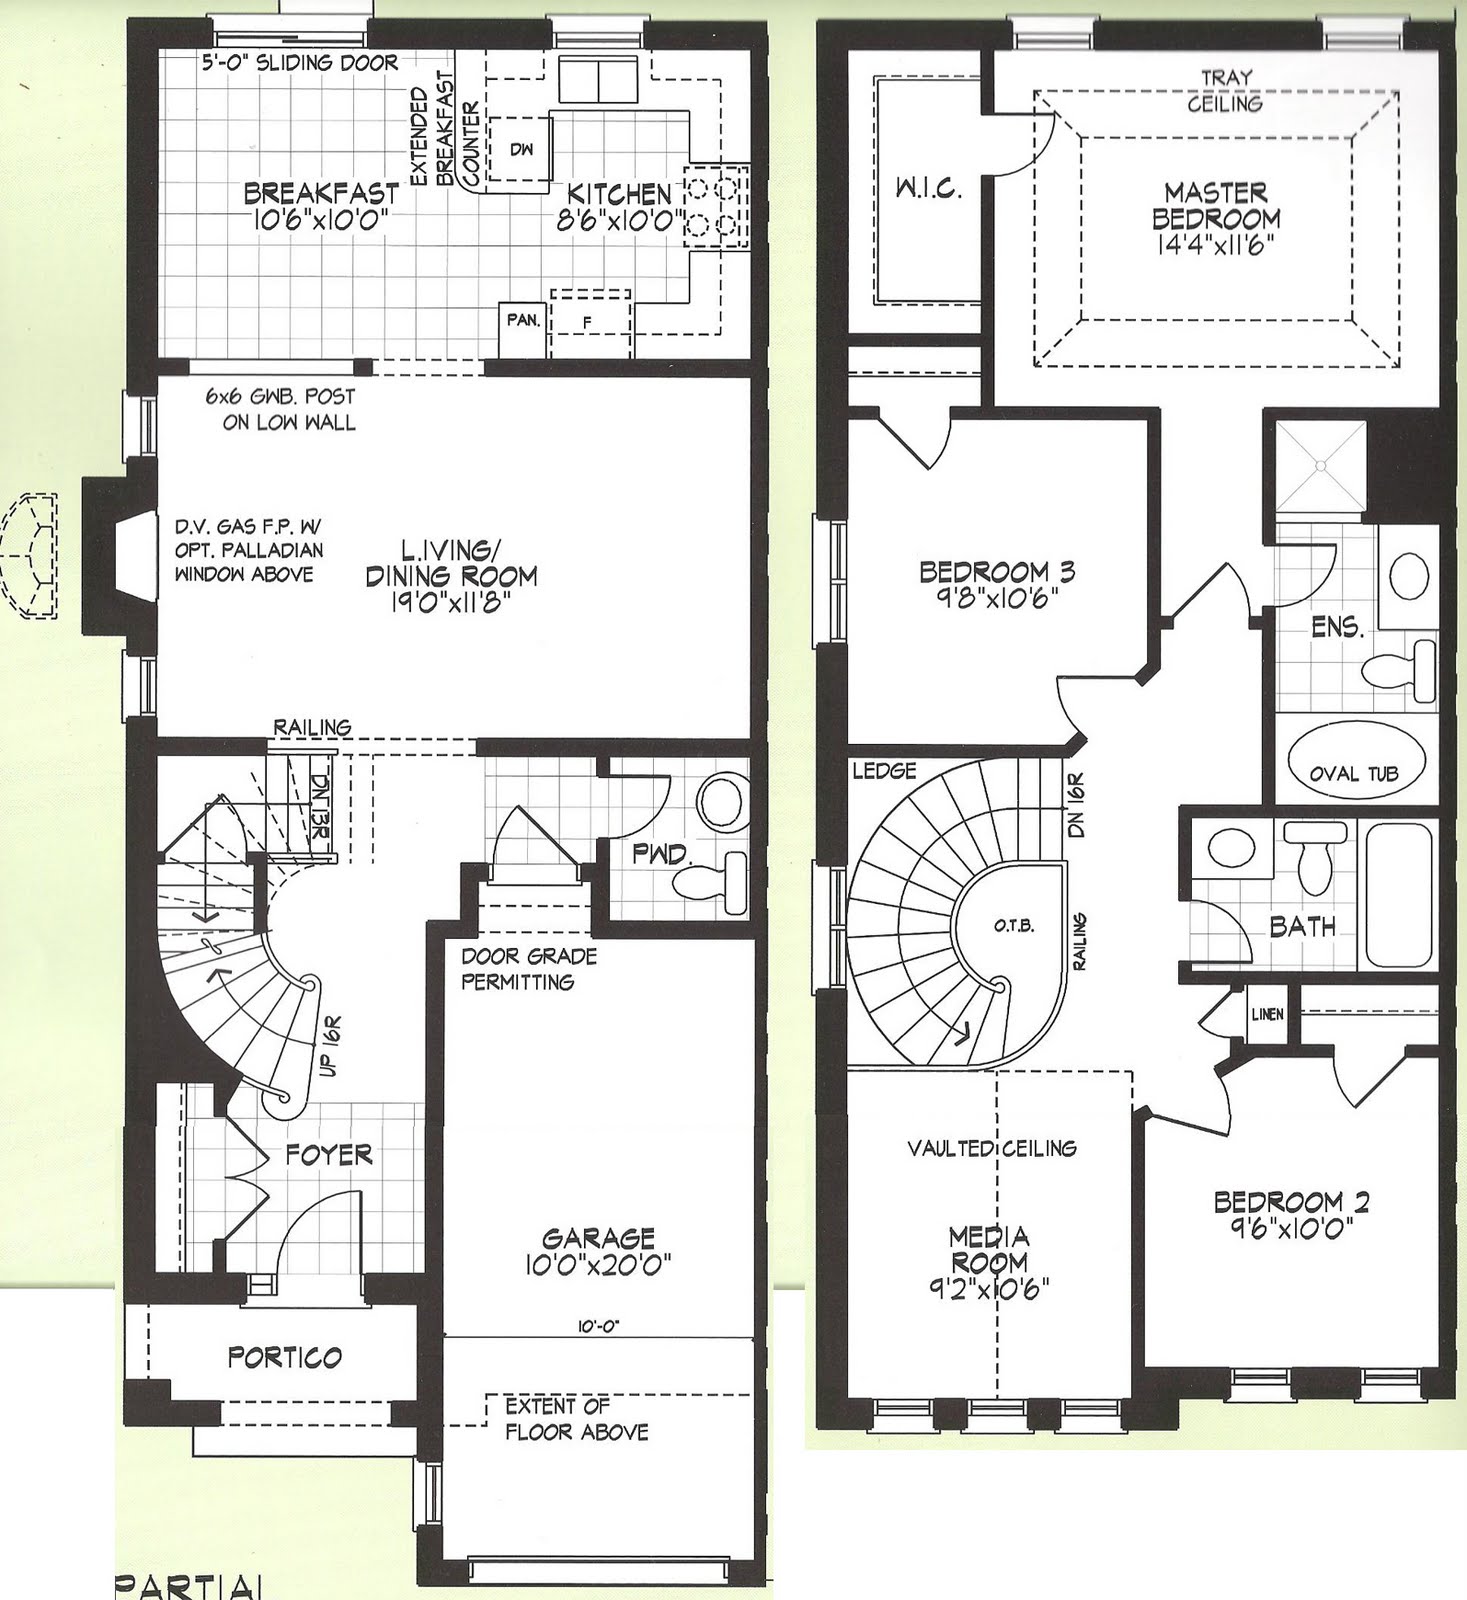 Eames House Floor Plan Dimensions - Interior Decorating Ideas